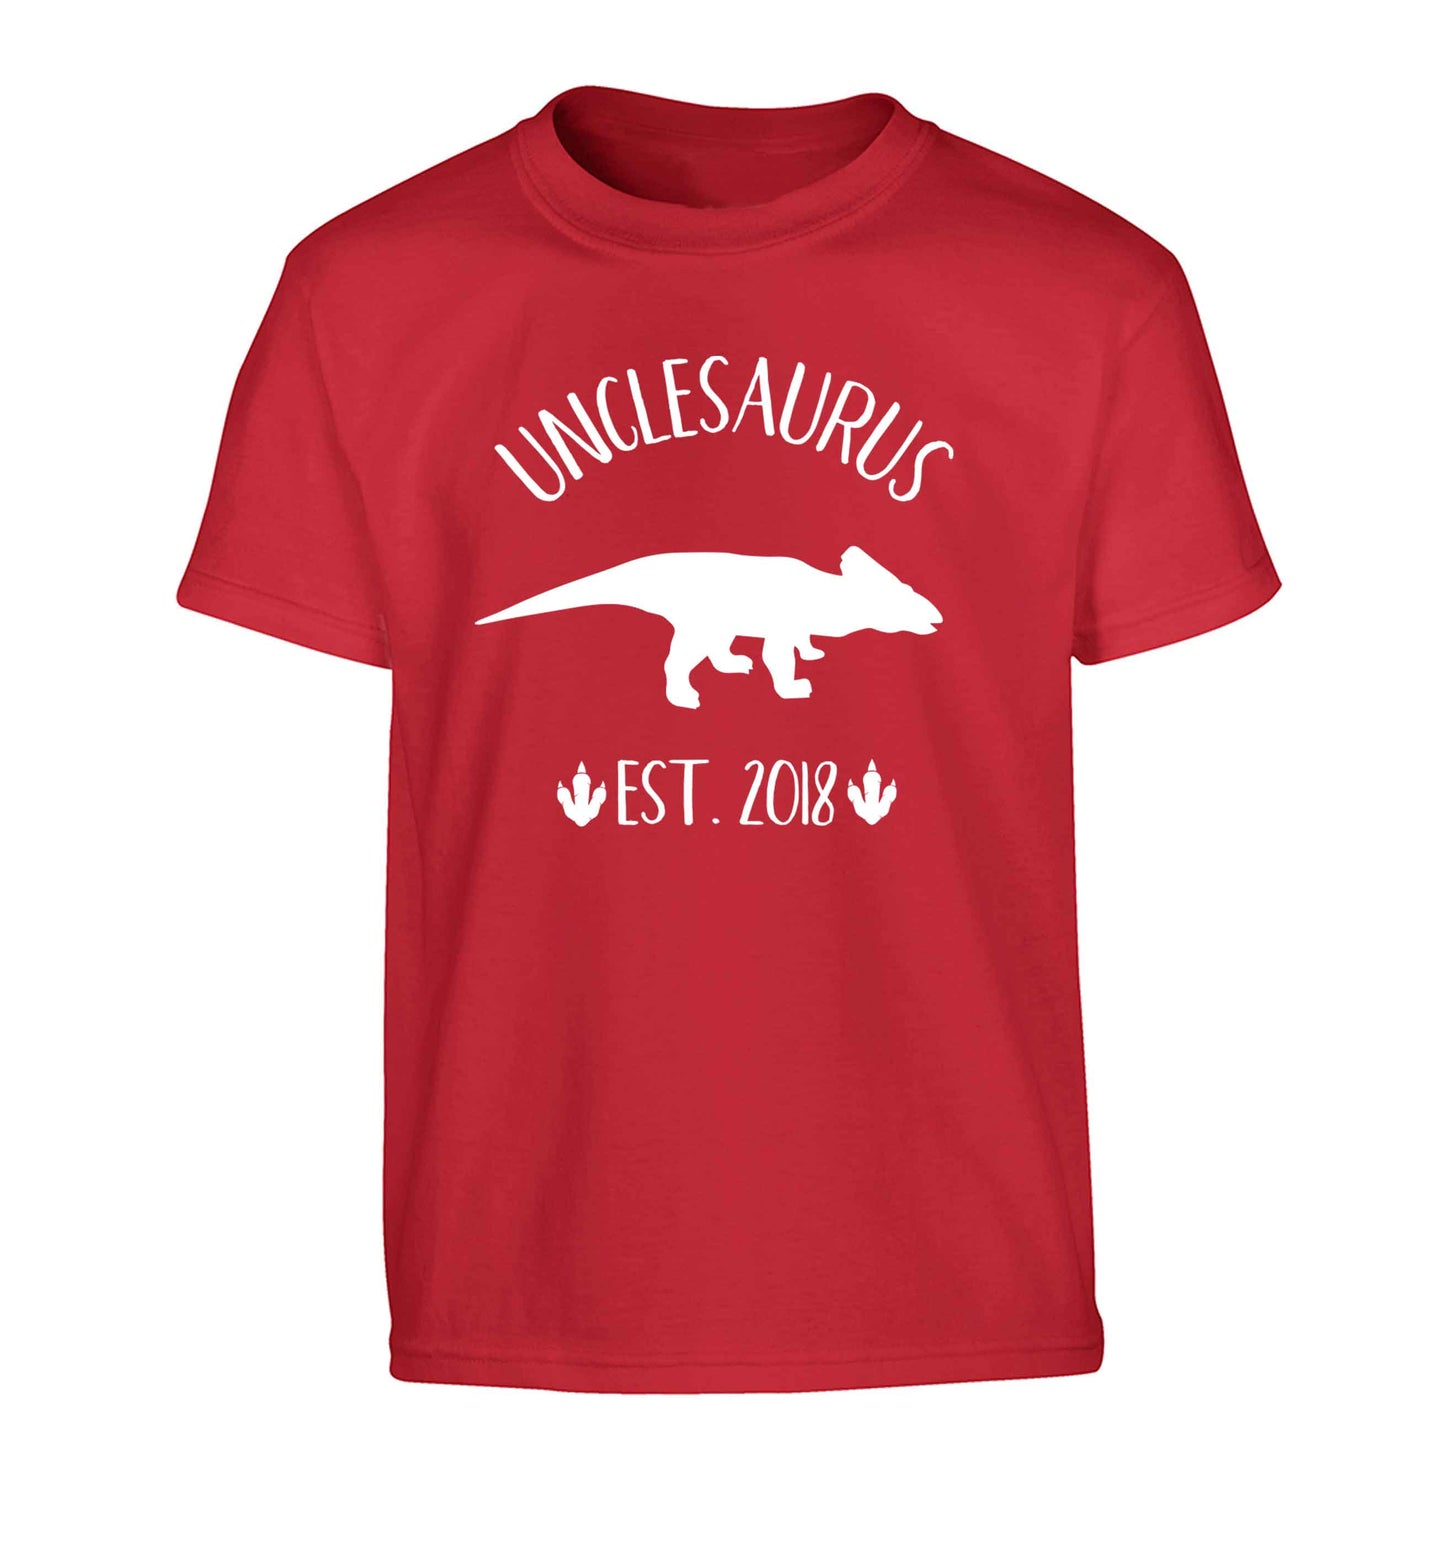 Personalised unclesaurus since (custom date) Children's red Tshirt 12-13 Years